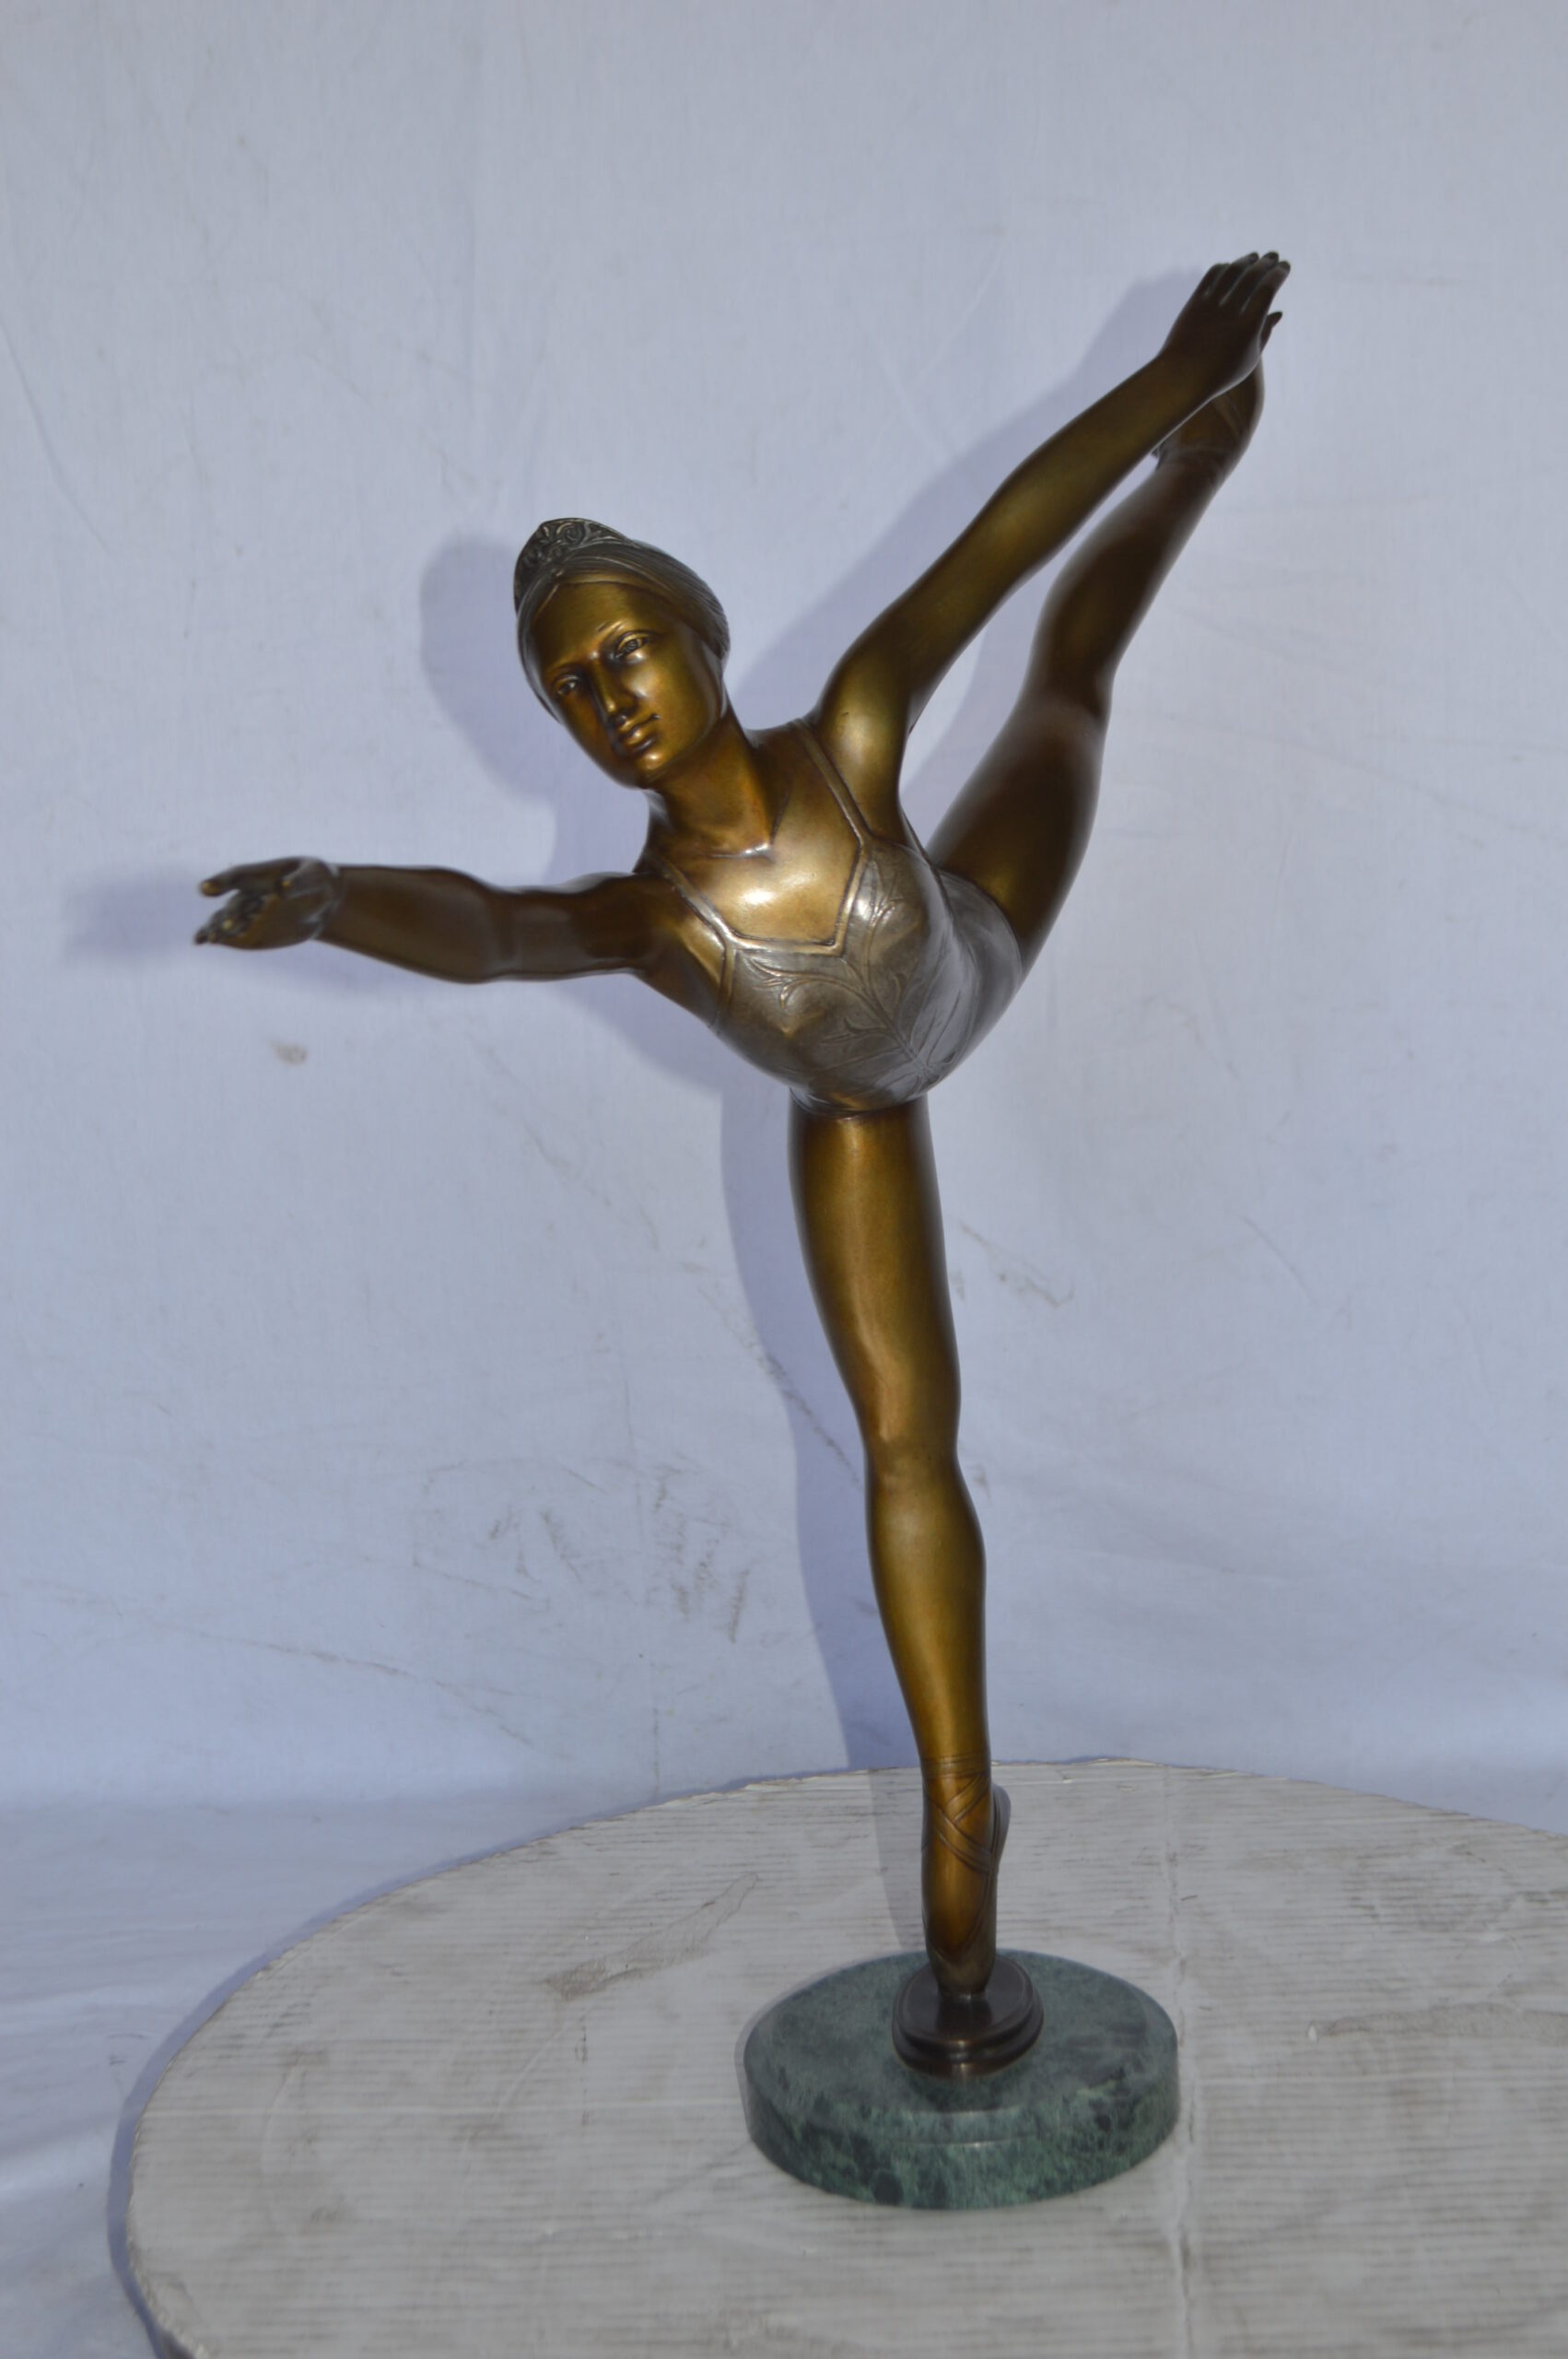 Dancing Action Bronze Statue - Size: 25"L x 8"W x 29"H. - NiFAO